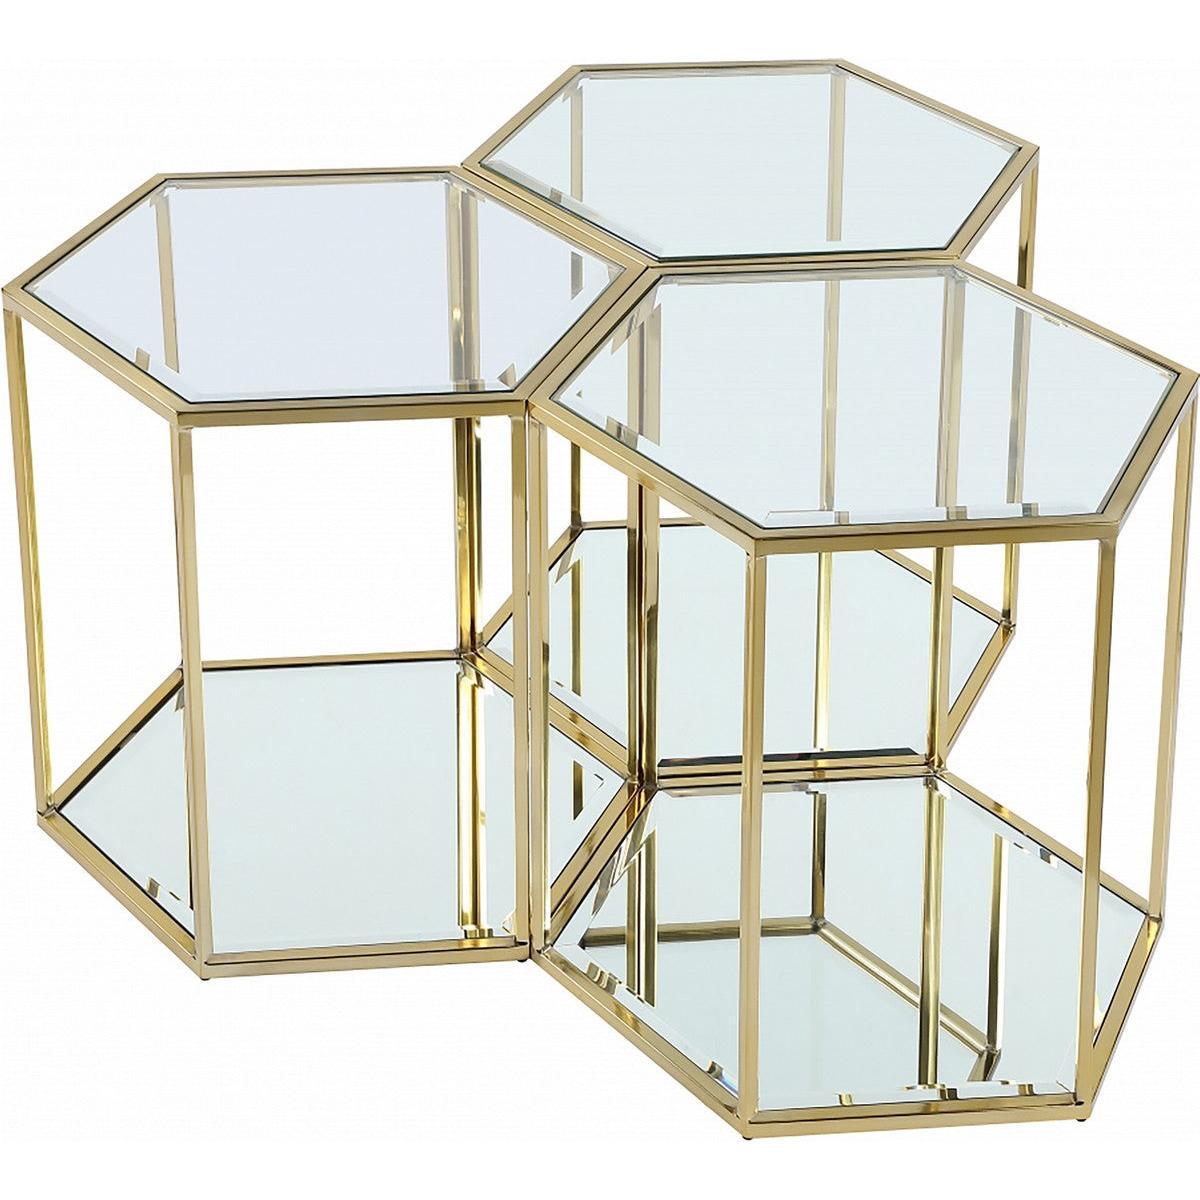 Meridian Furniture Sei Brushed Gold End TableMeridian Furniture - End Table - Minimal And Modern - 1